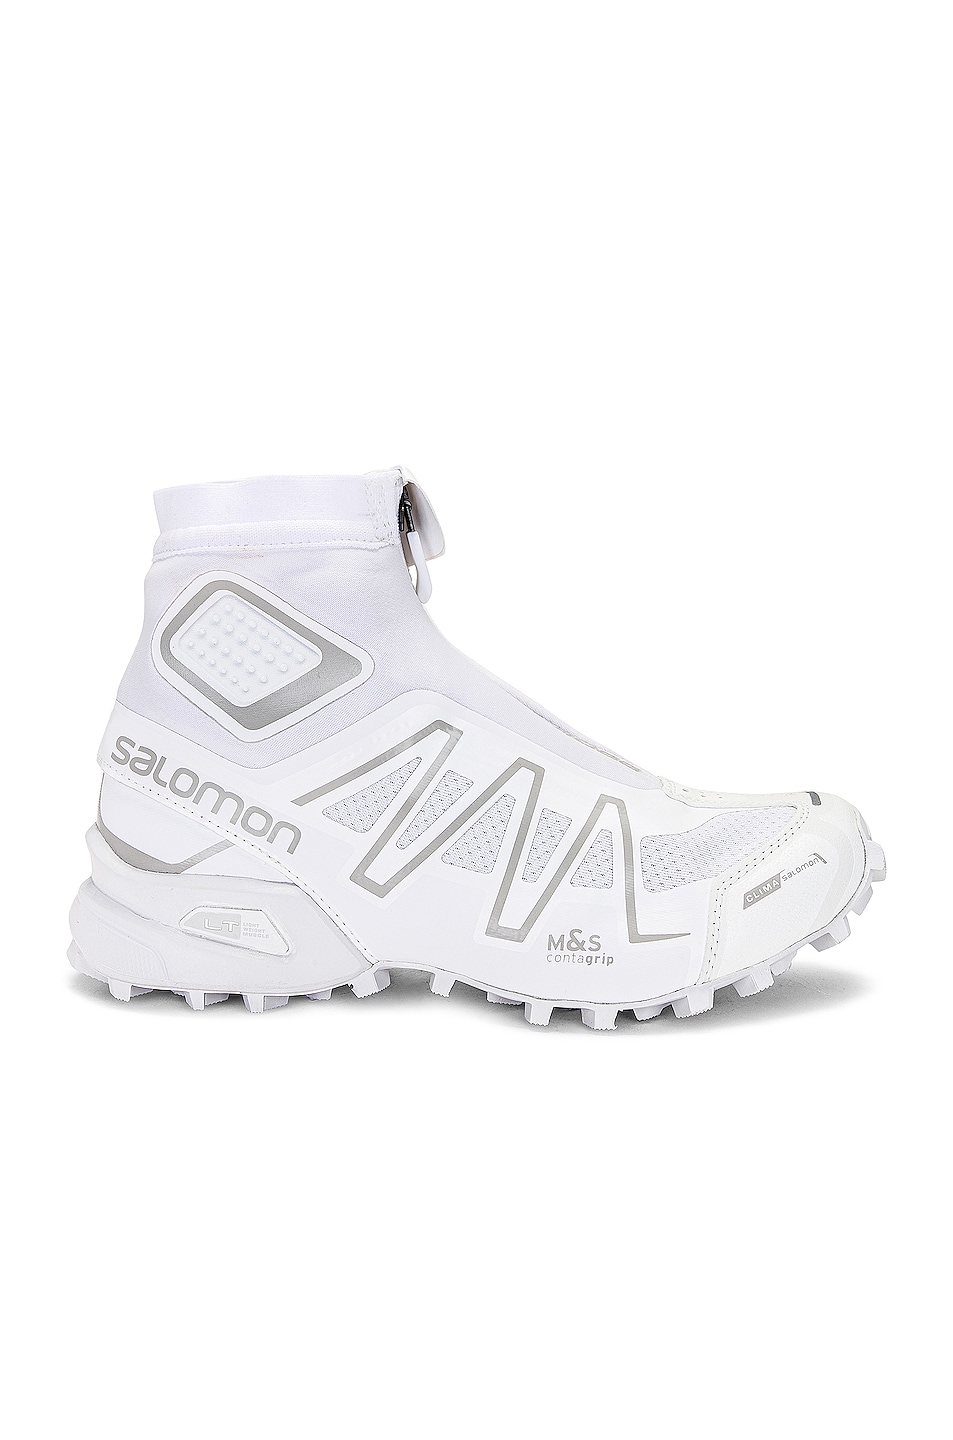 Image 1 of Salomon Snowcross Sneakers in White, White, & Lunar Rock